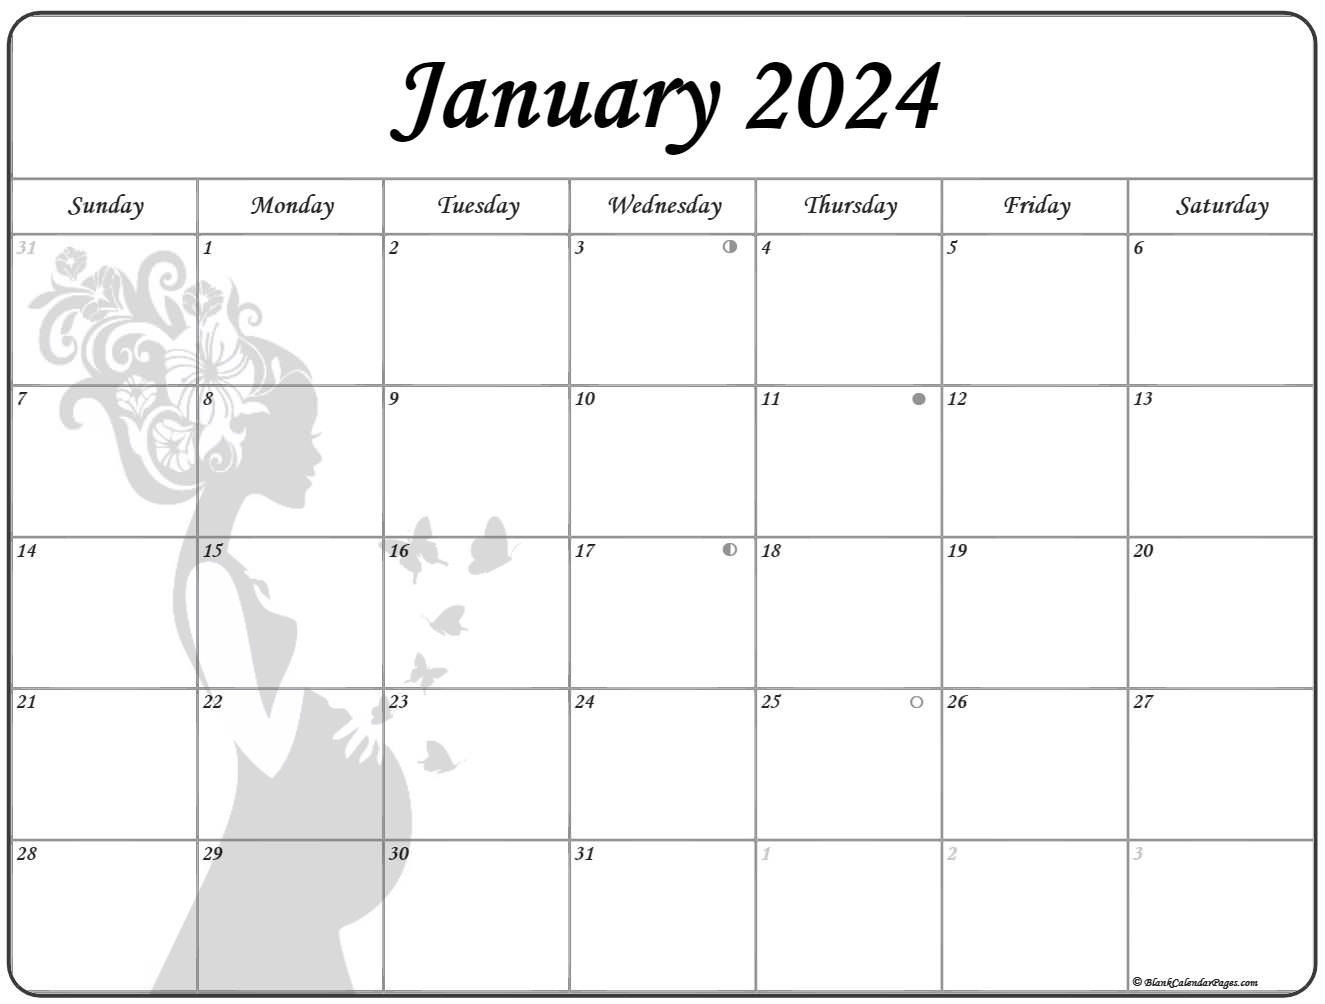 January 2020 Pregnancy Calendar